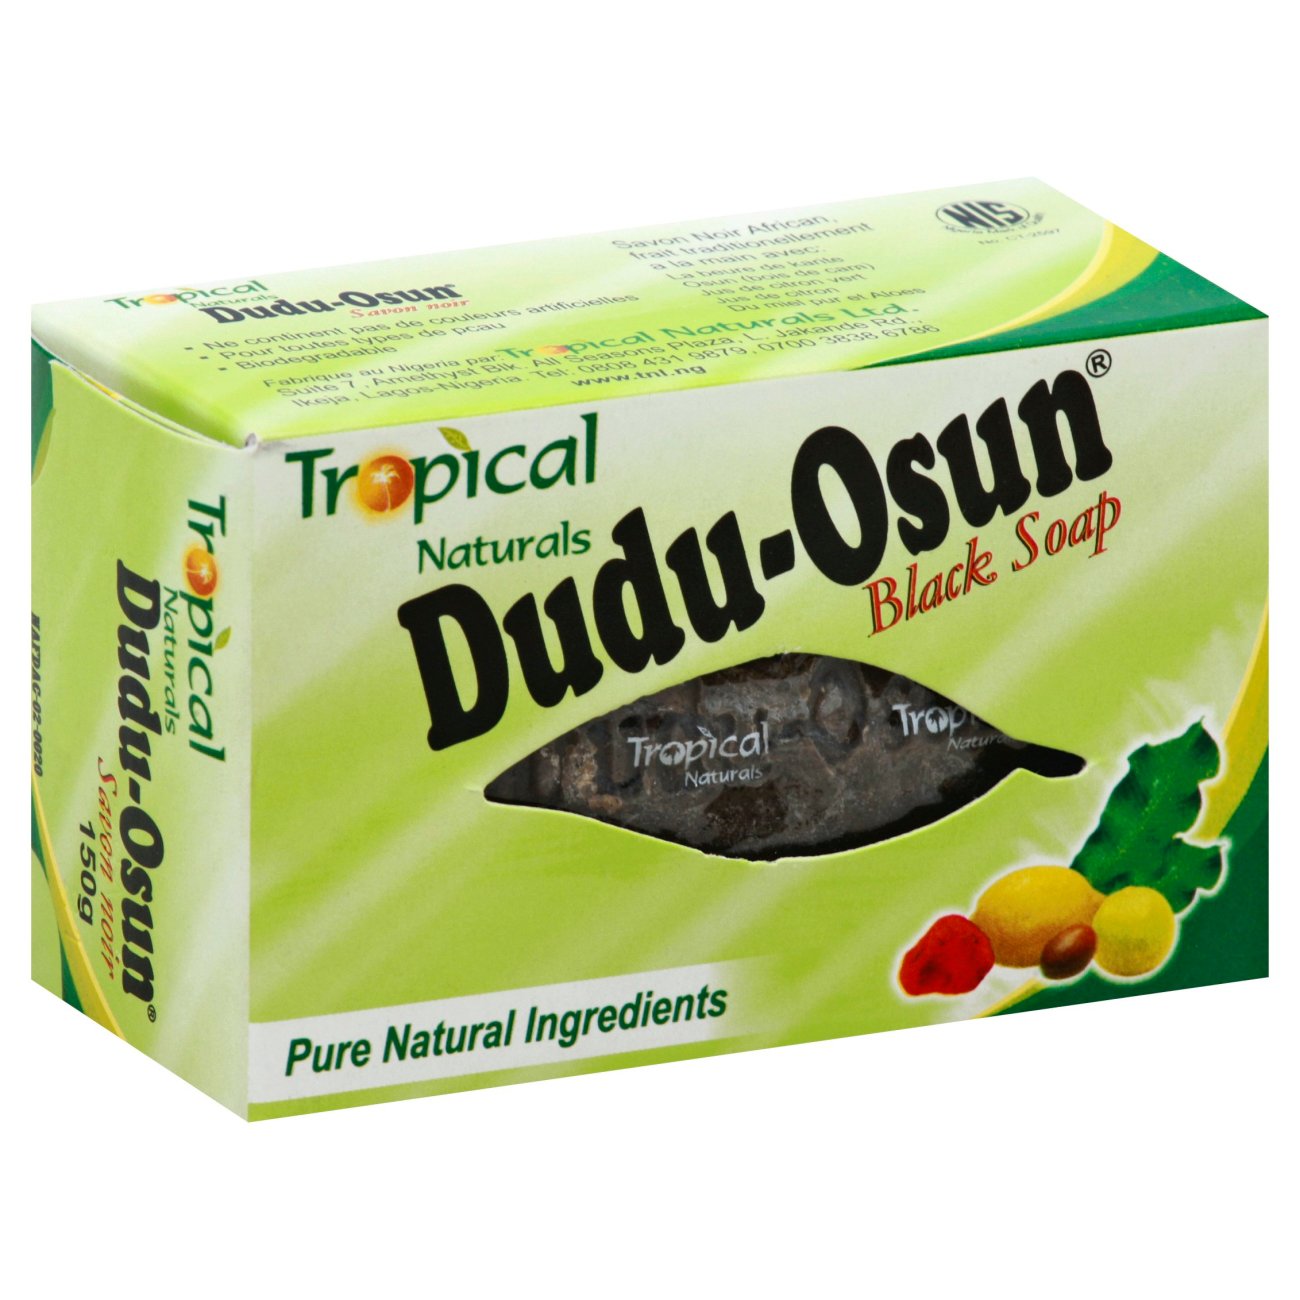 Tropical Naturals Dudu-Osun Black Soap - Shop Bath & Skin Care at H-E-B